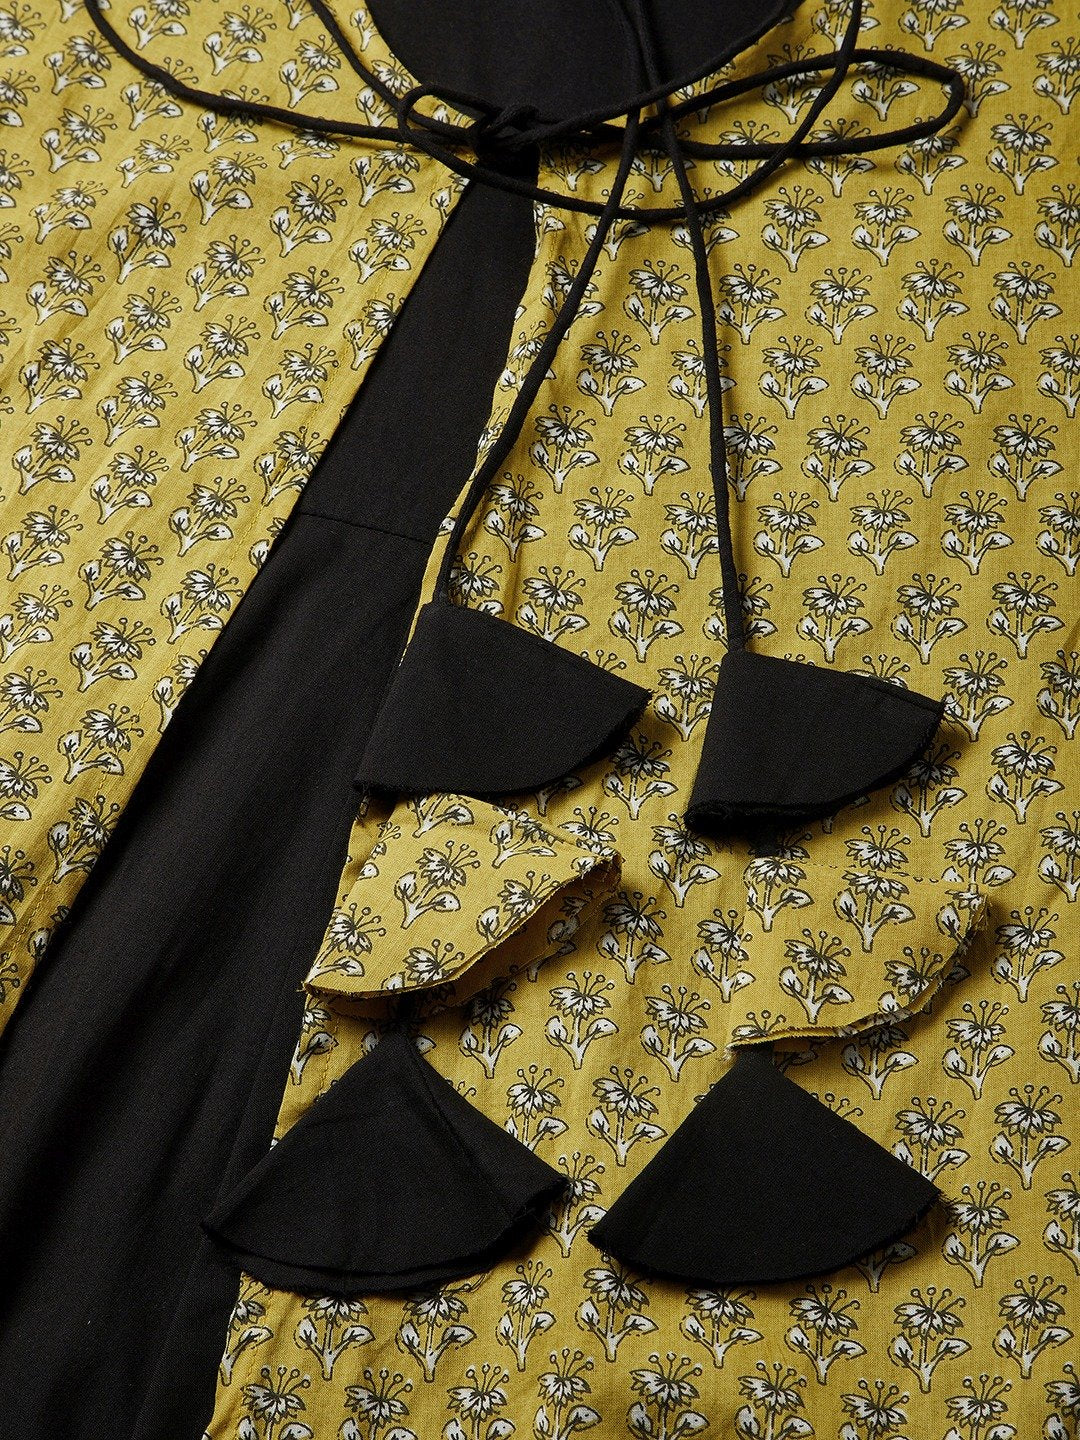 Black Anarkali Dress With Yellow Floral Print Jacket